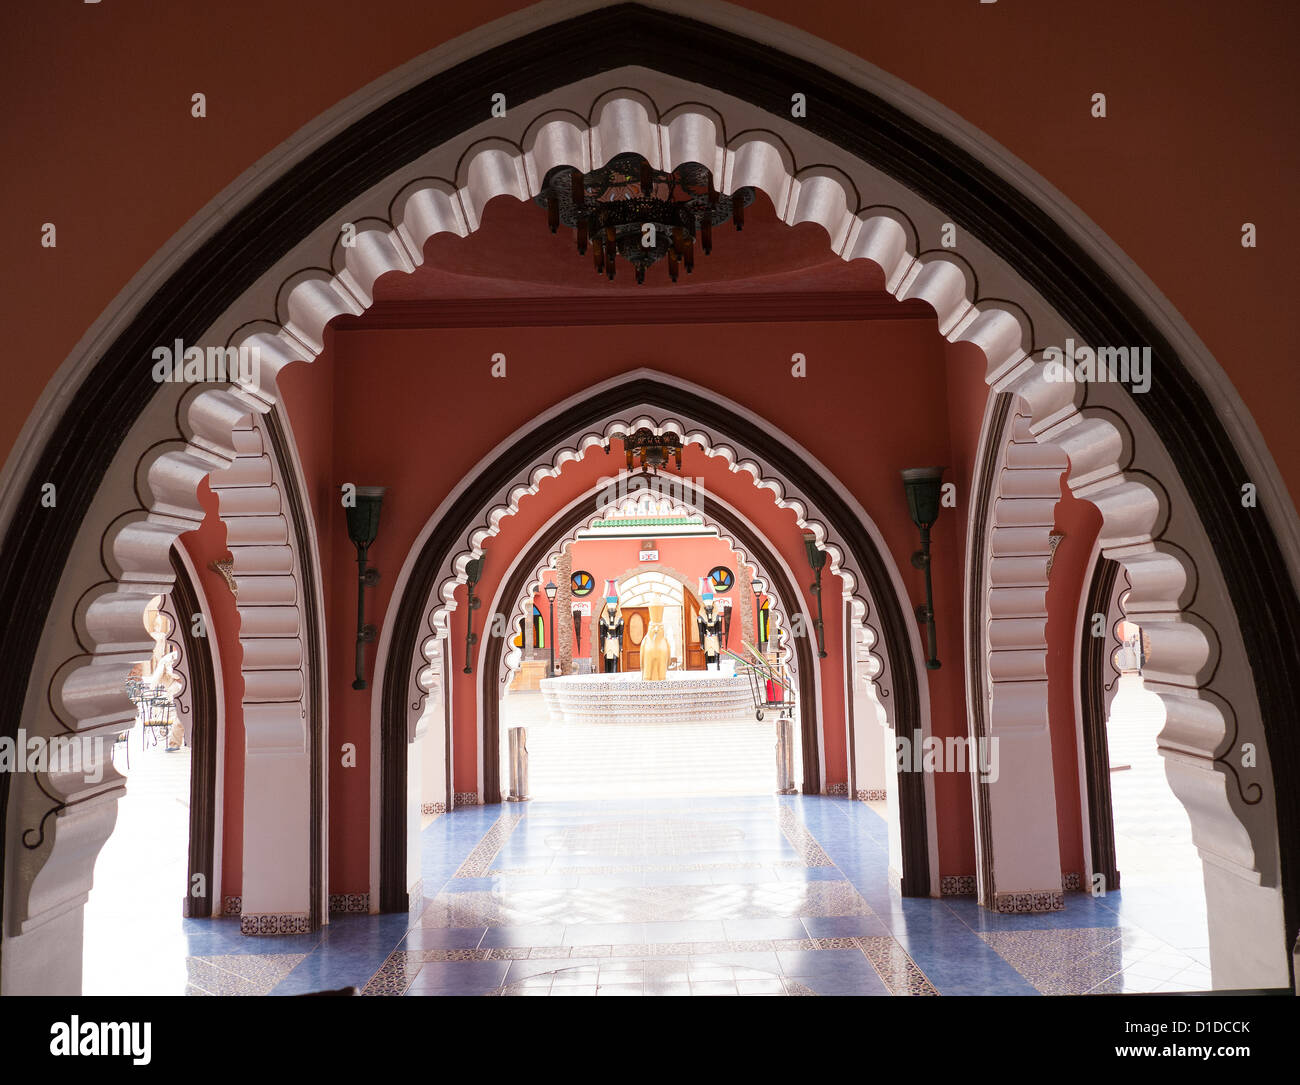 Decorative archways inside Fantasia, an entertainment centre in Sharm El Sheikh, Egypt Stock Photo